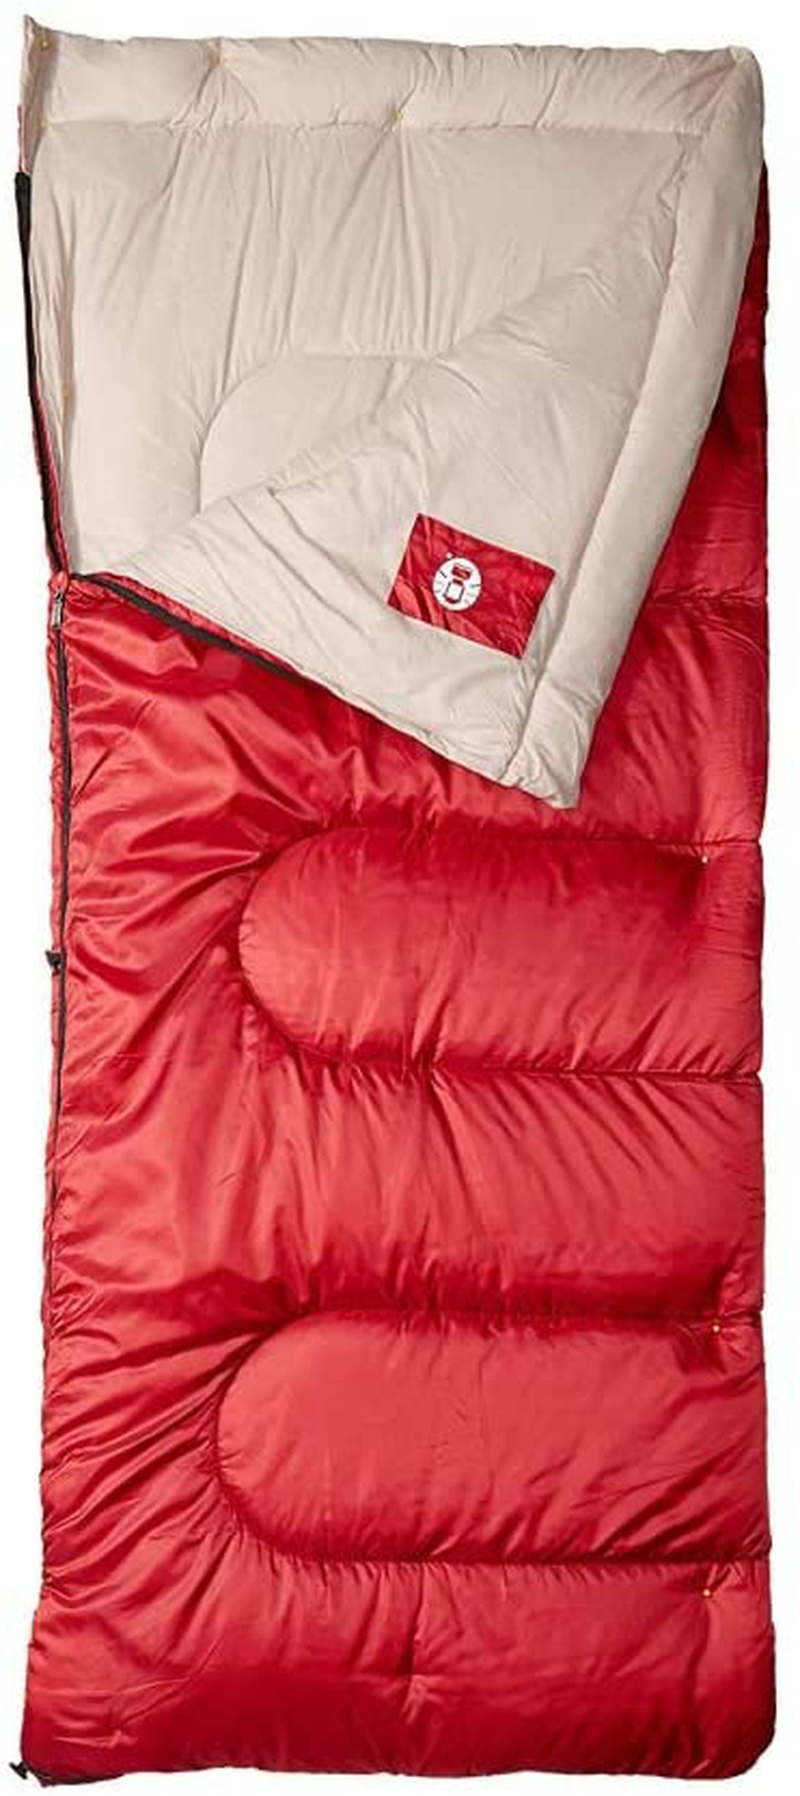 Coleman Sleeping Bag | 30°F Palmetto Sleeping Bag | Cool Weather Sleeping Bag , Red Sporting Goods > Outdoor Recreation > Camping & Hiking > Sleeping Bags Coleman   